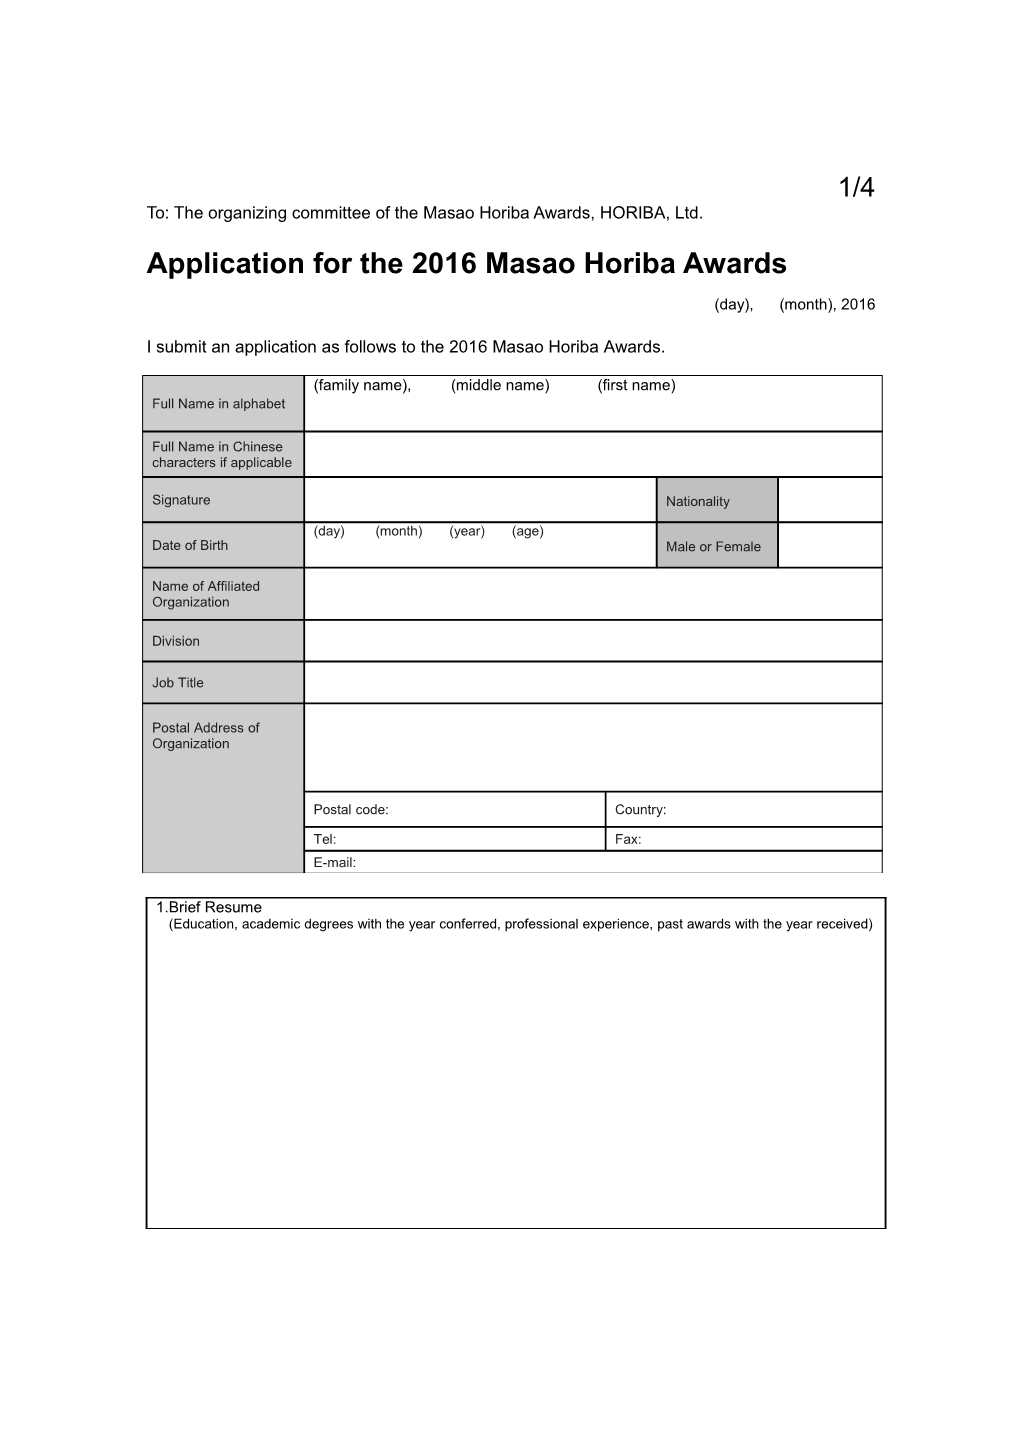 Application for the 2016 Masao Horiba Awards